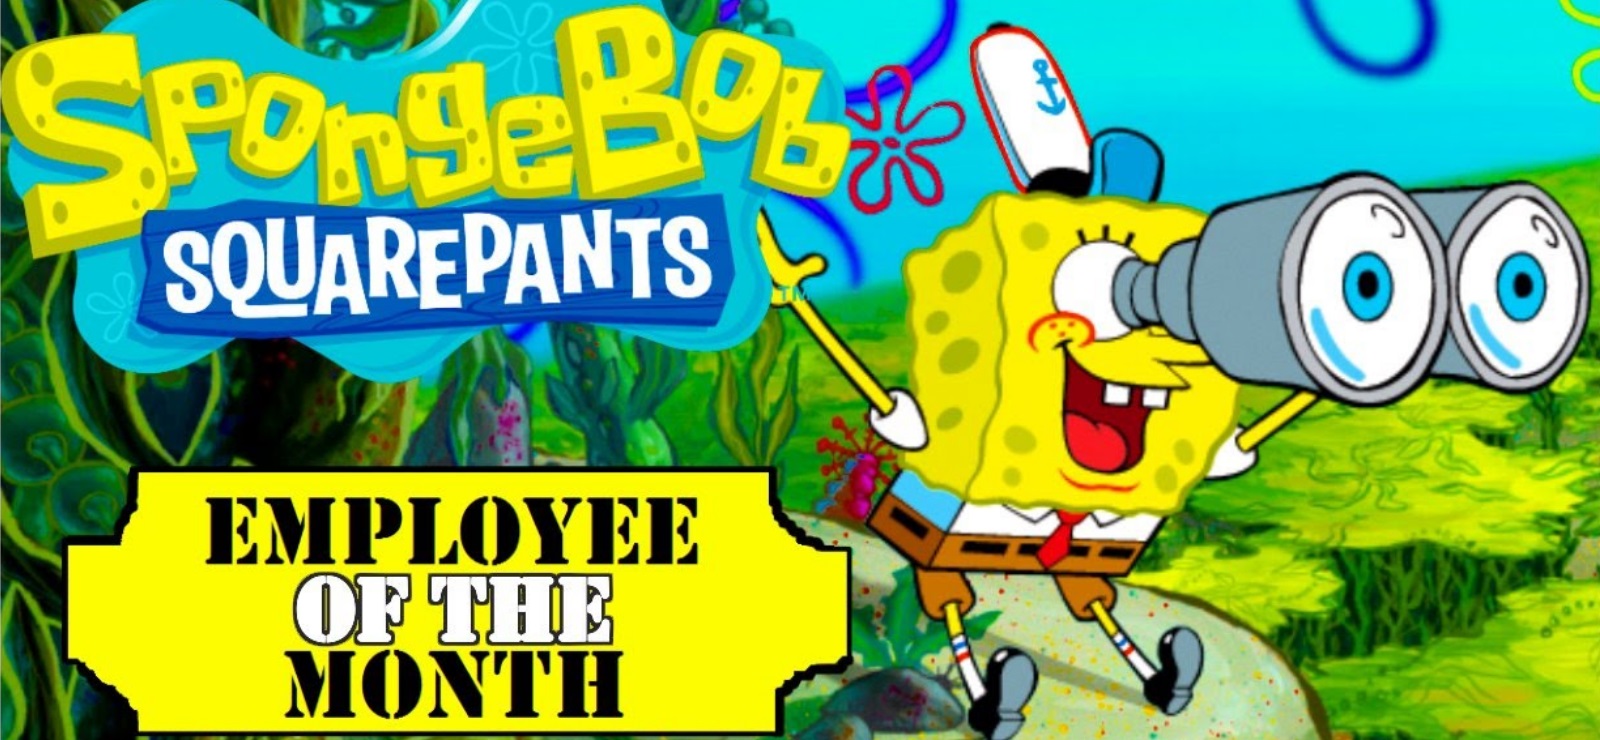 spongebob squarepants employee of the month game download